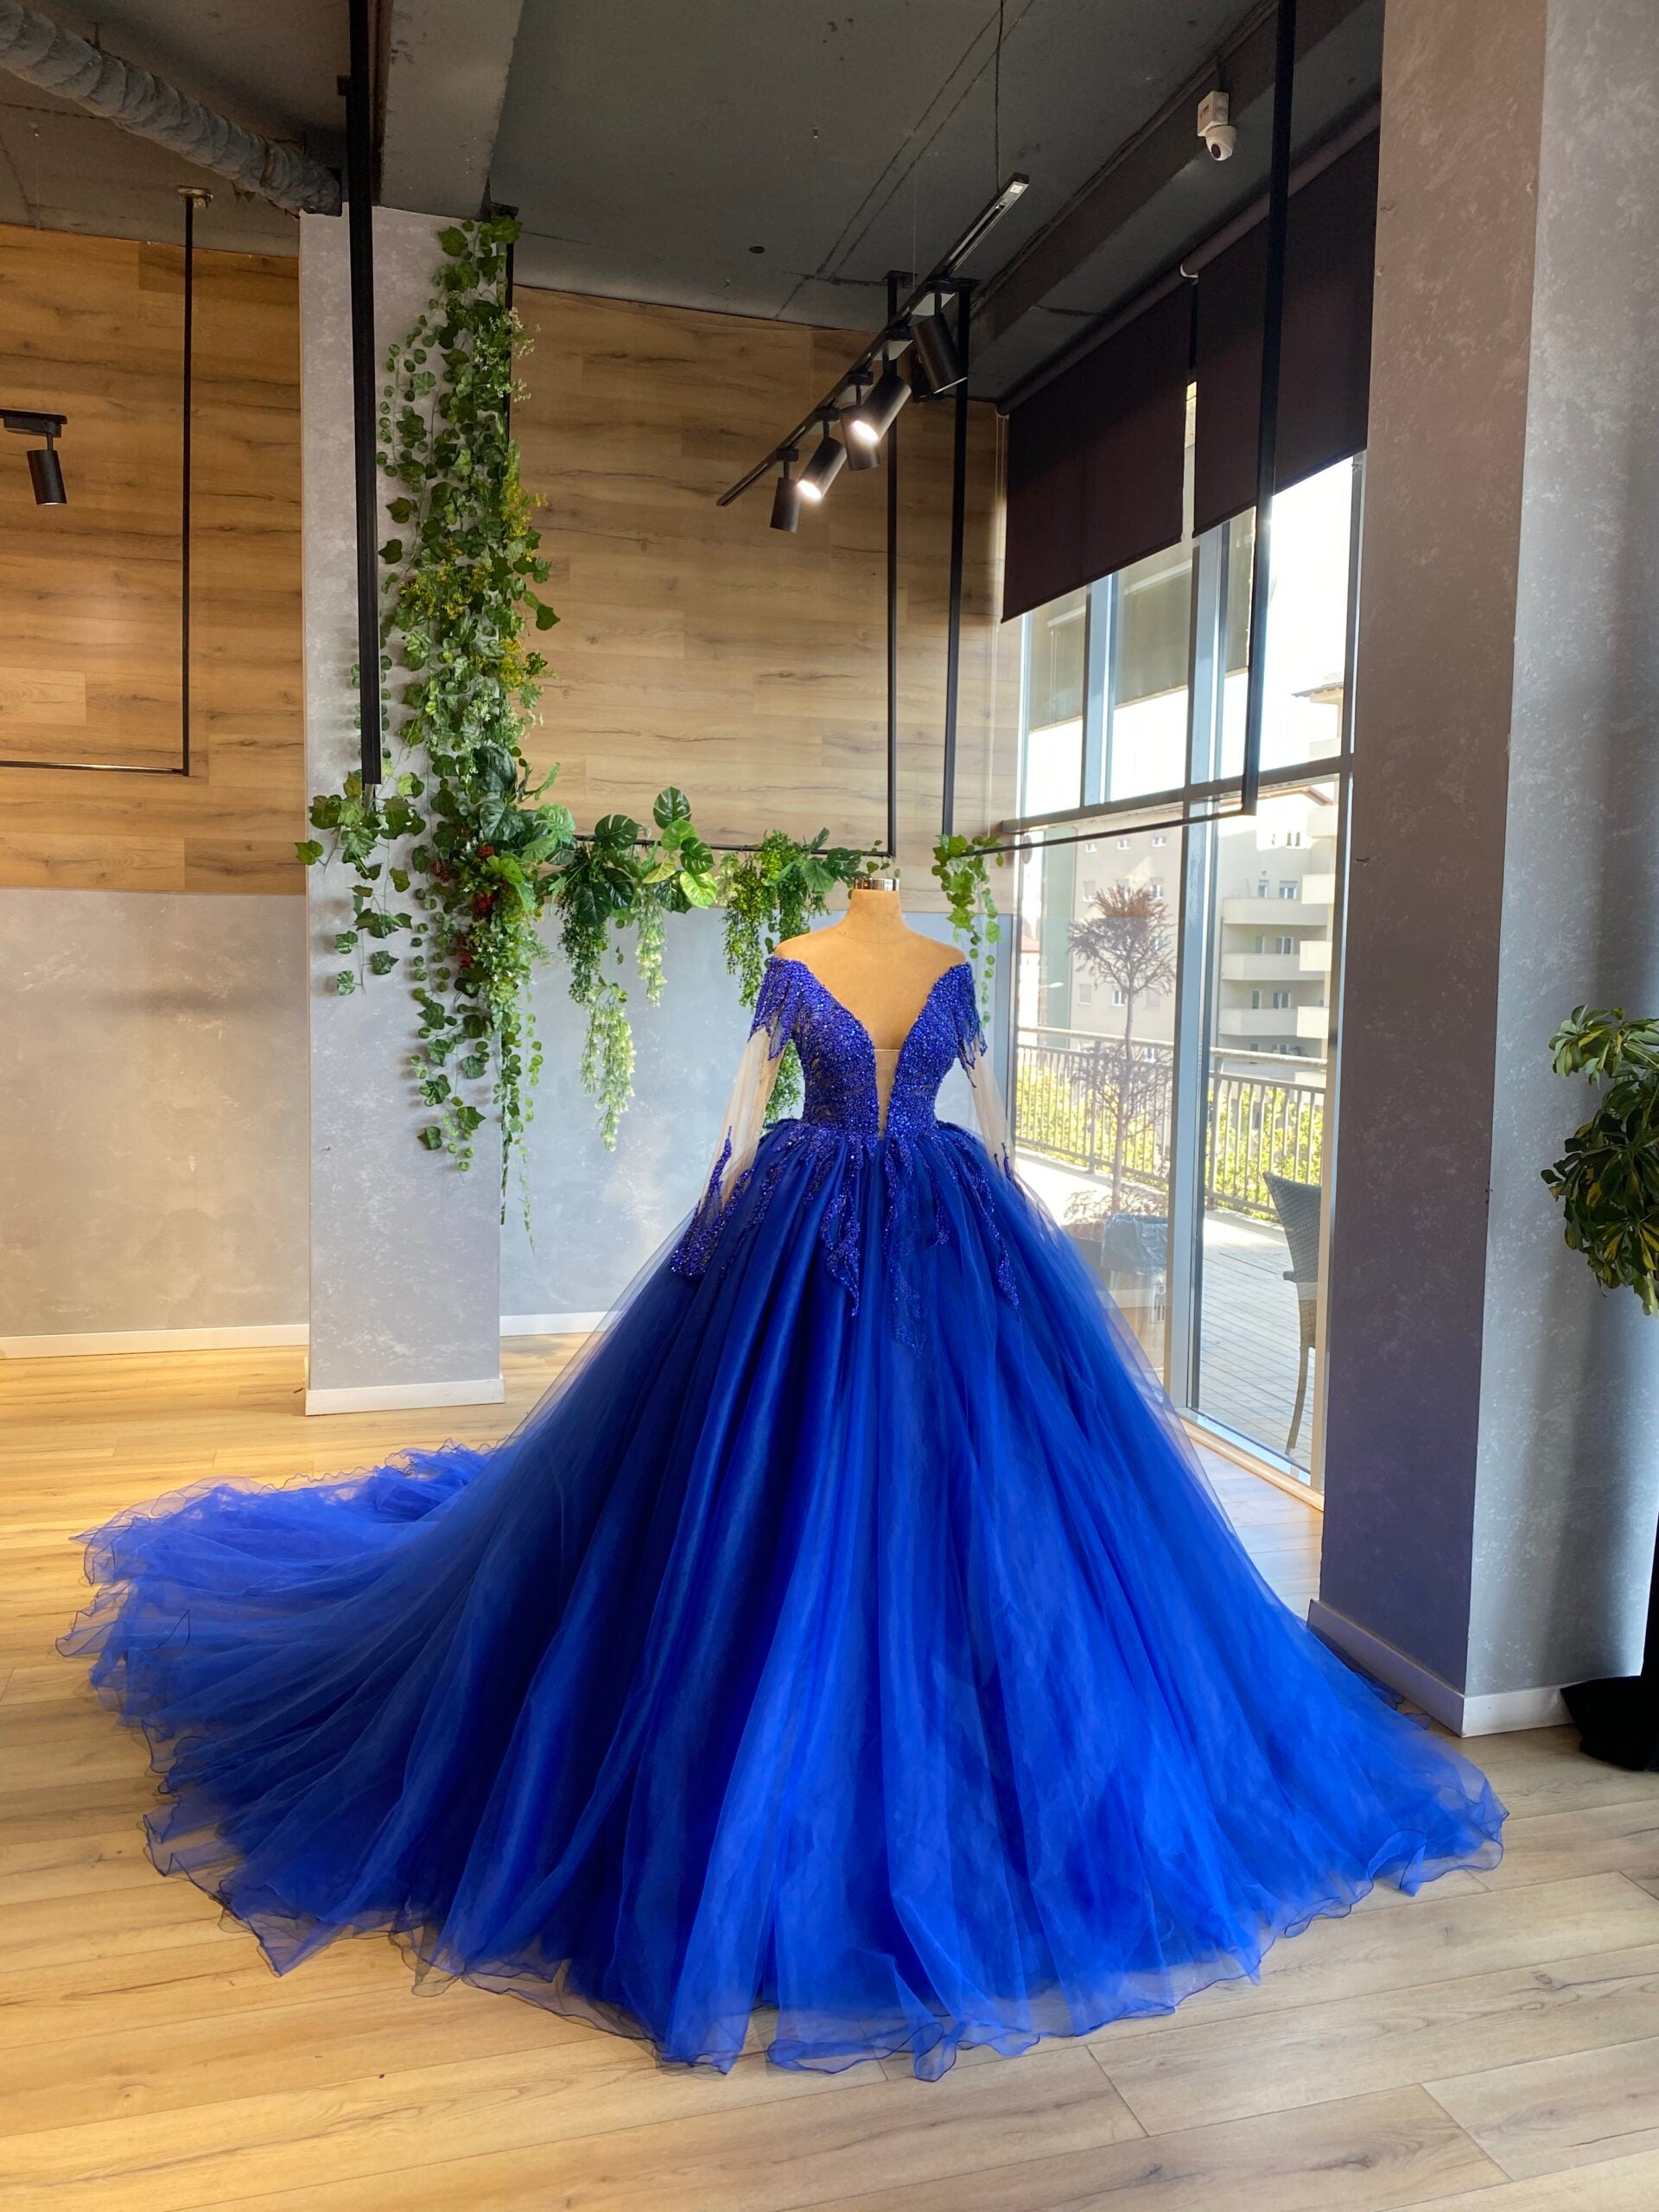 Update more than 174 blue gown dress photos best